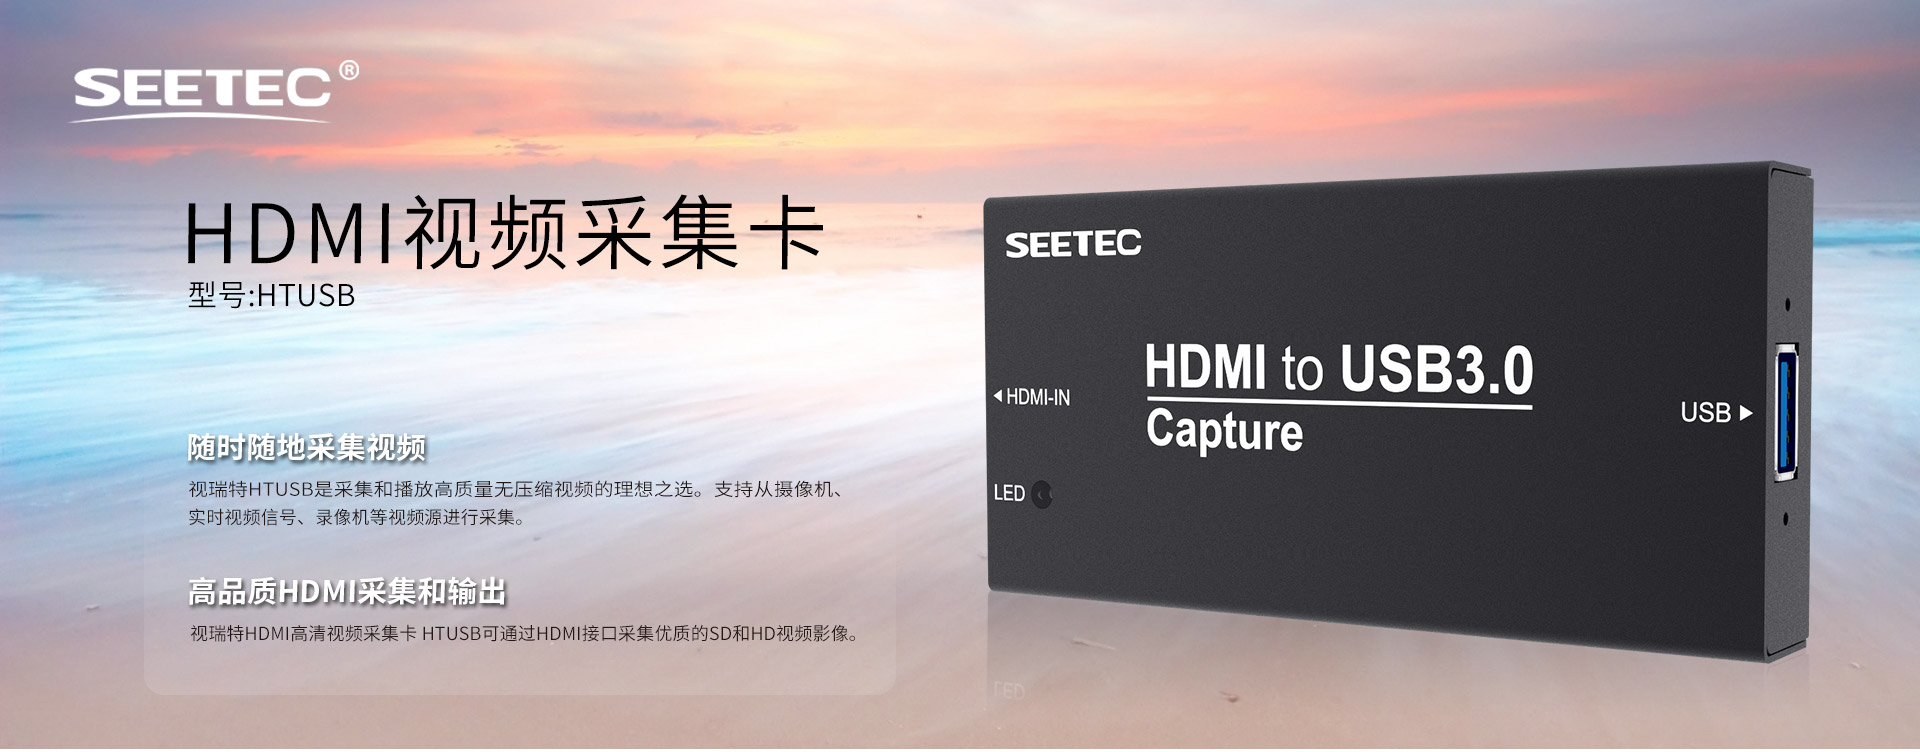 HDMI to USB 30 视频采集卡